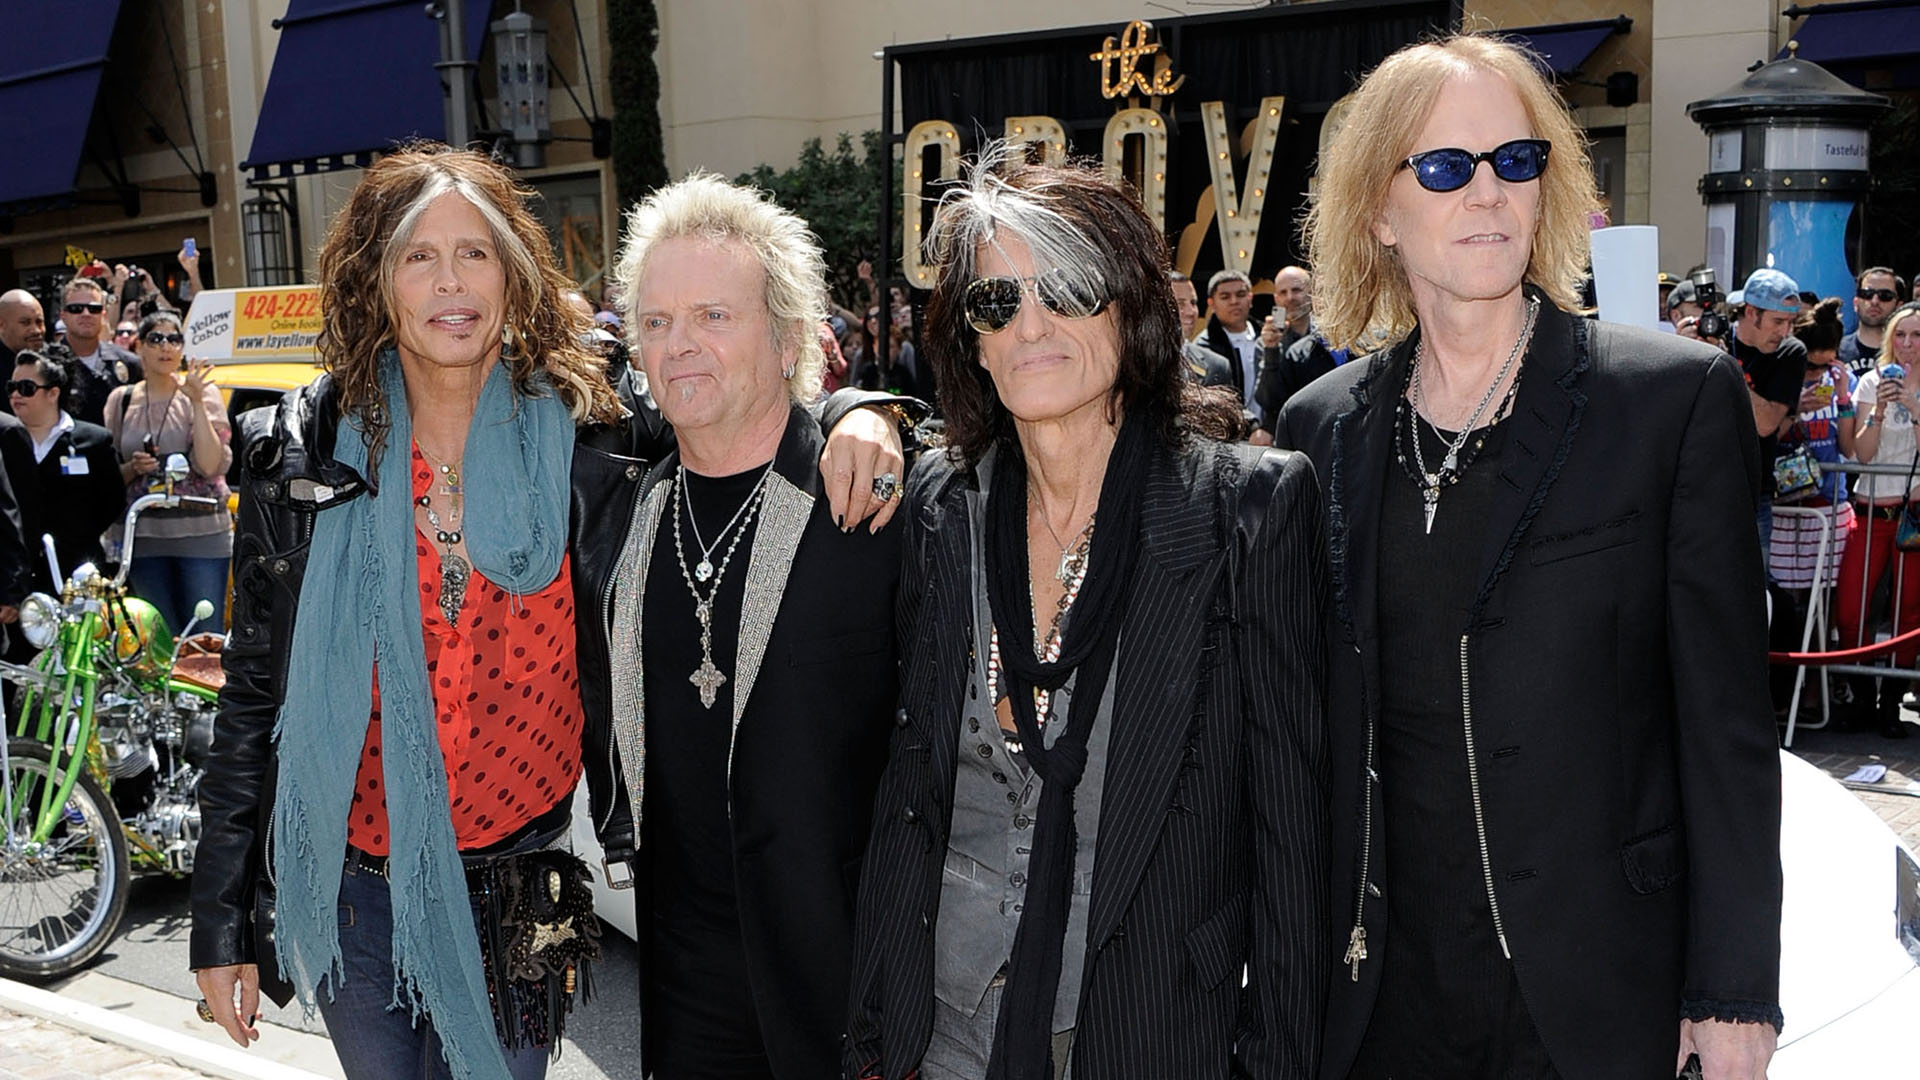 Steven Tyler, Joey Kramer, Joe Perry y Tom Hamilton: Aerosmith en pleno, en el año 2012